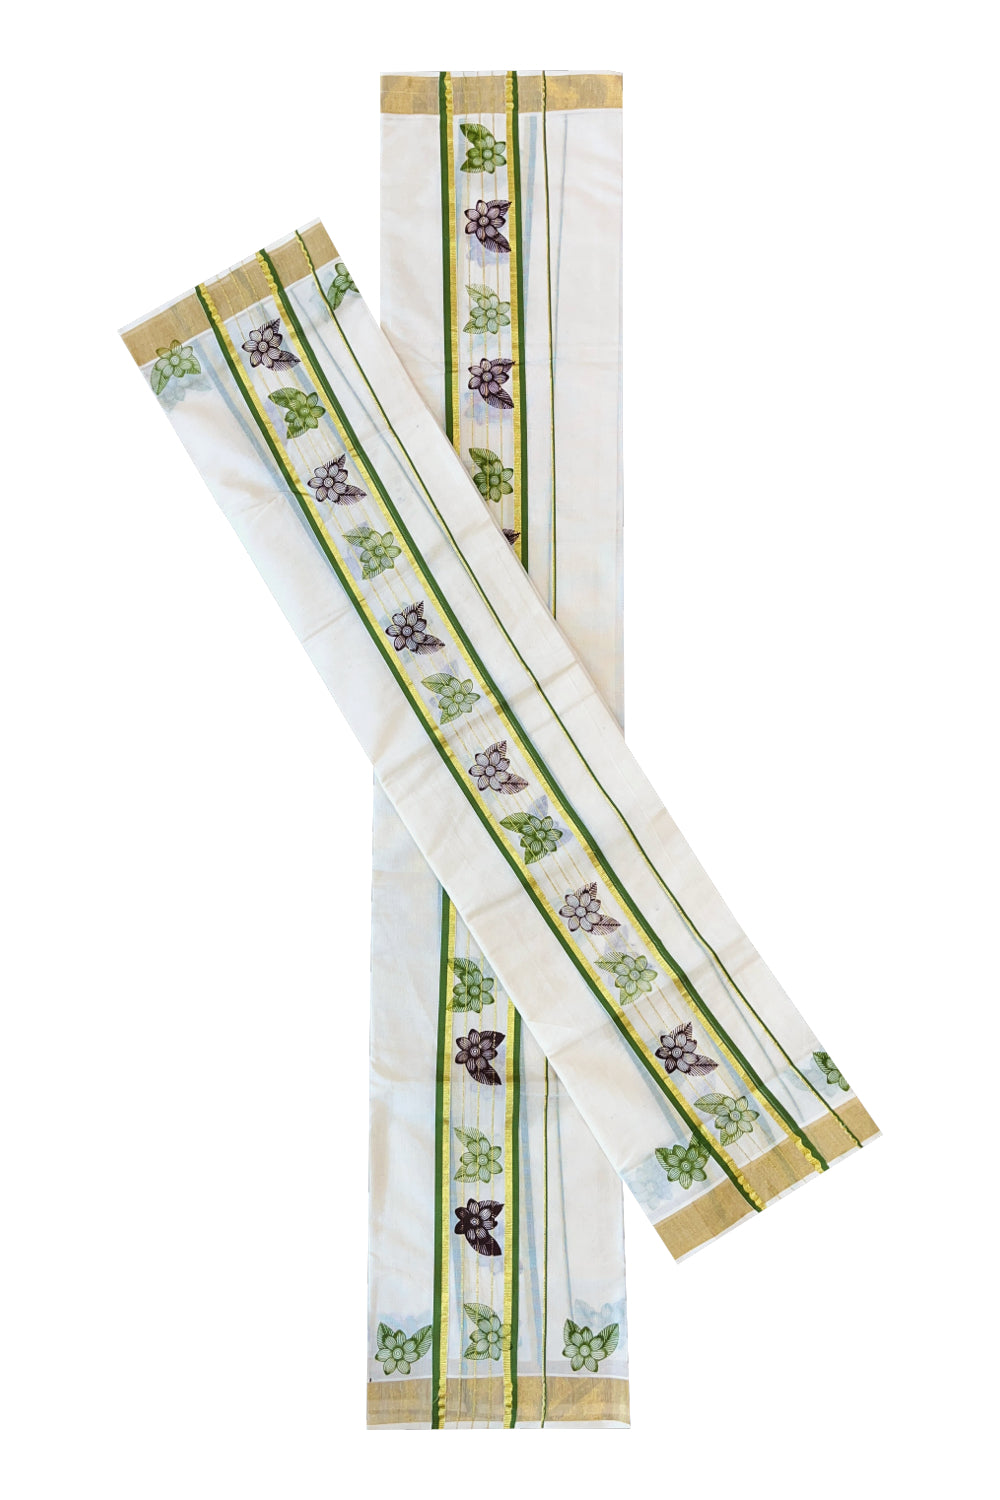 Cotton Single Set Mundu (Mundu Neriyathum) with Floral Block Prints on Green and Kasavu Border